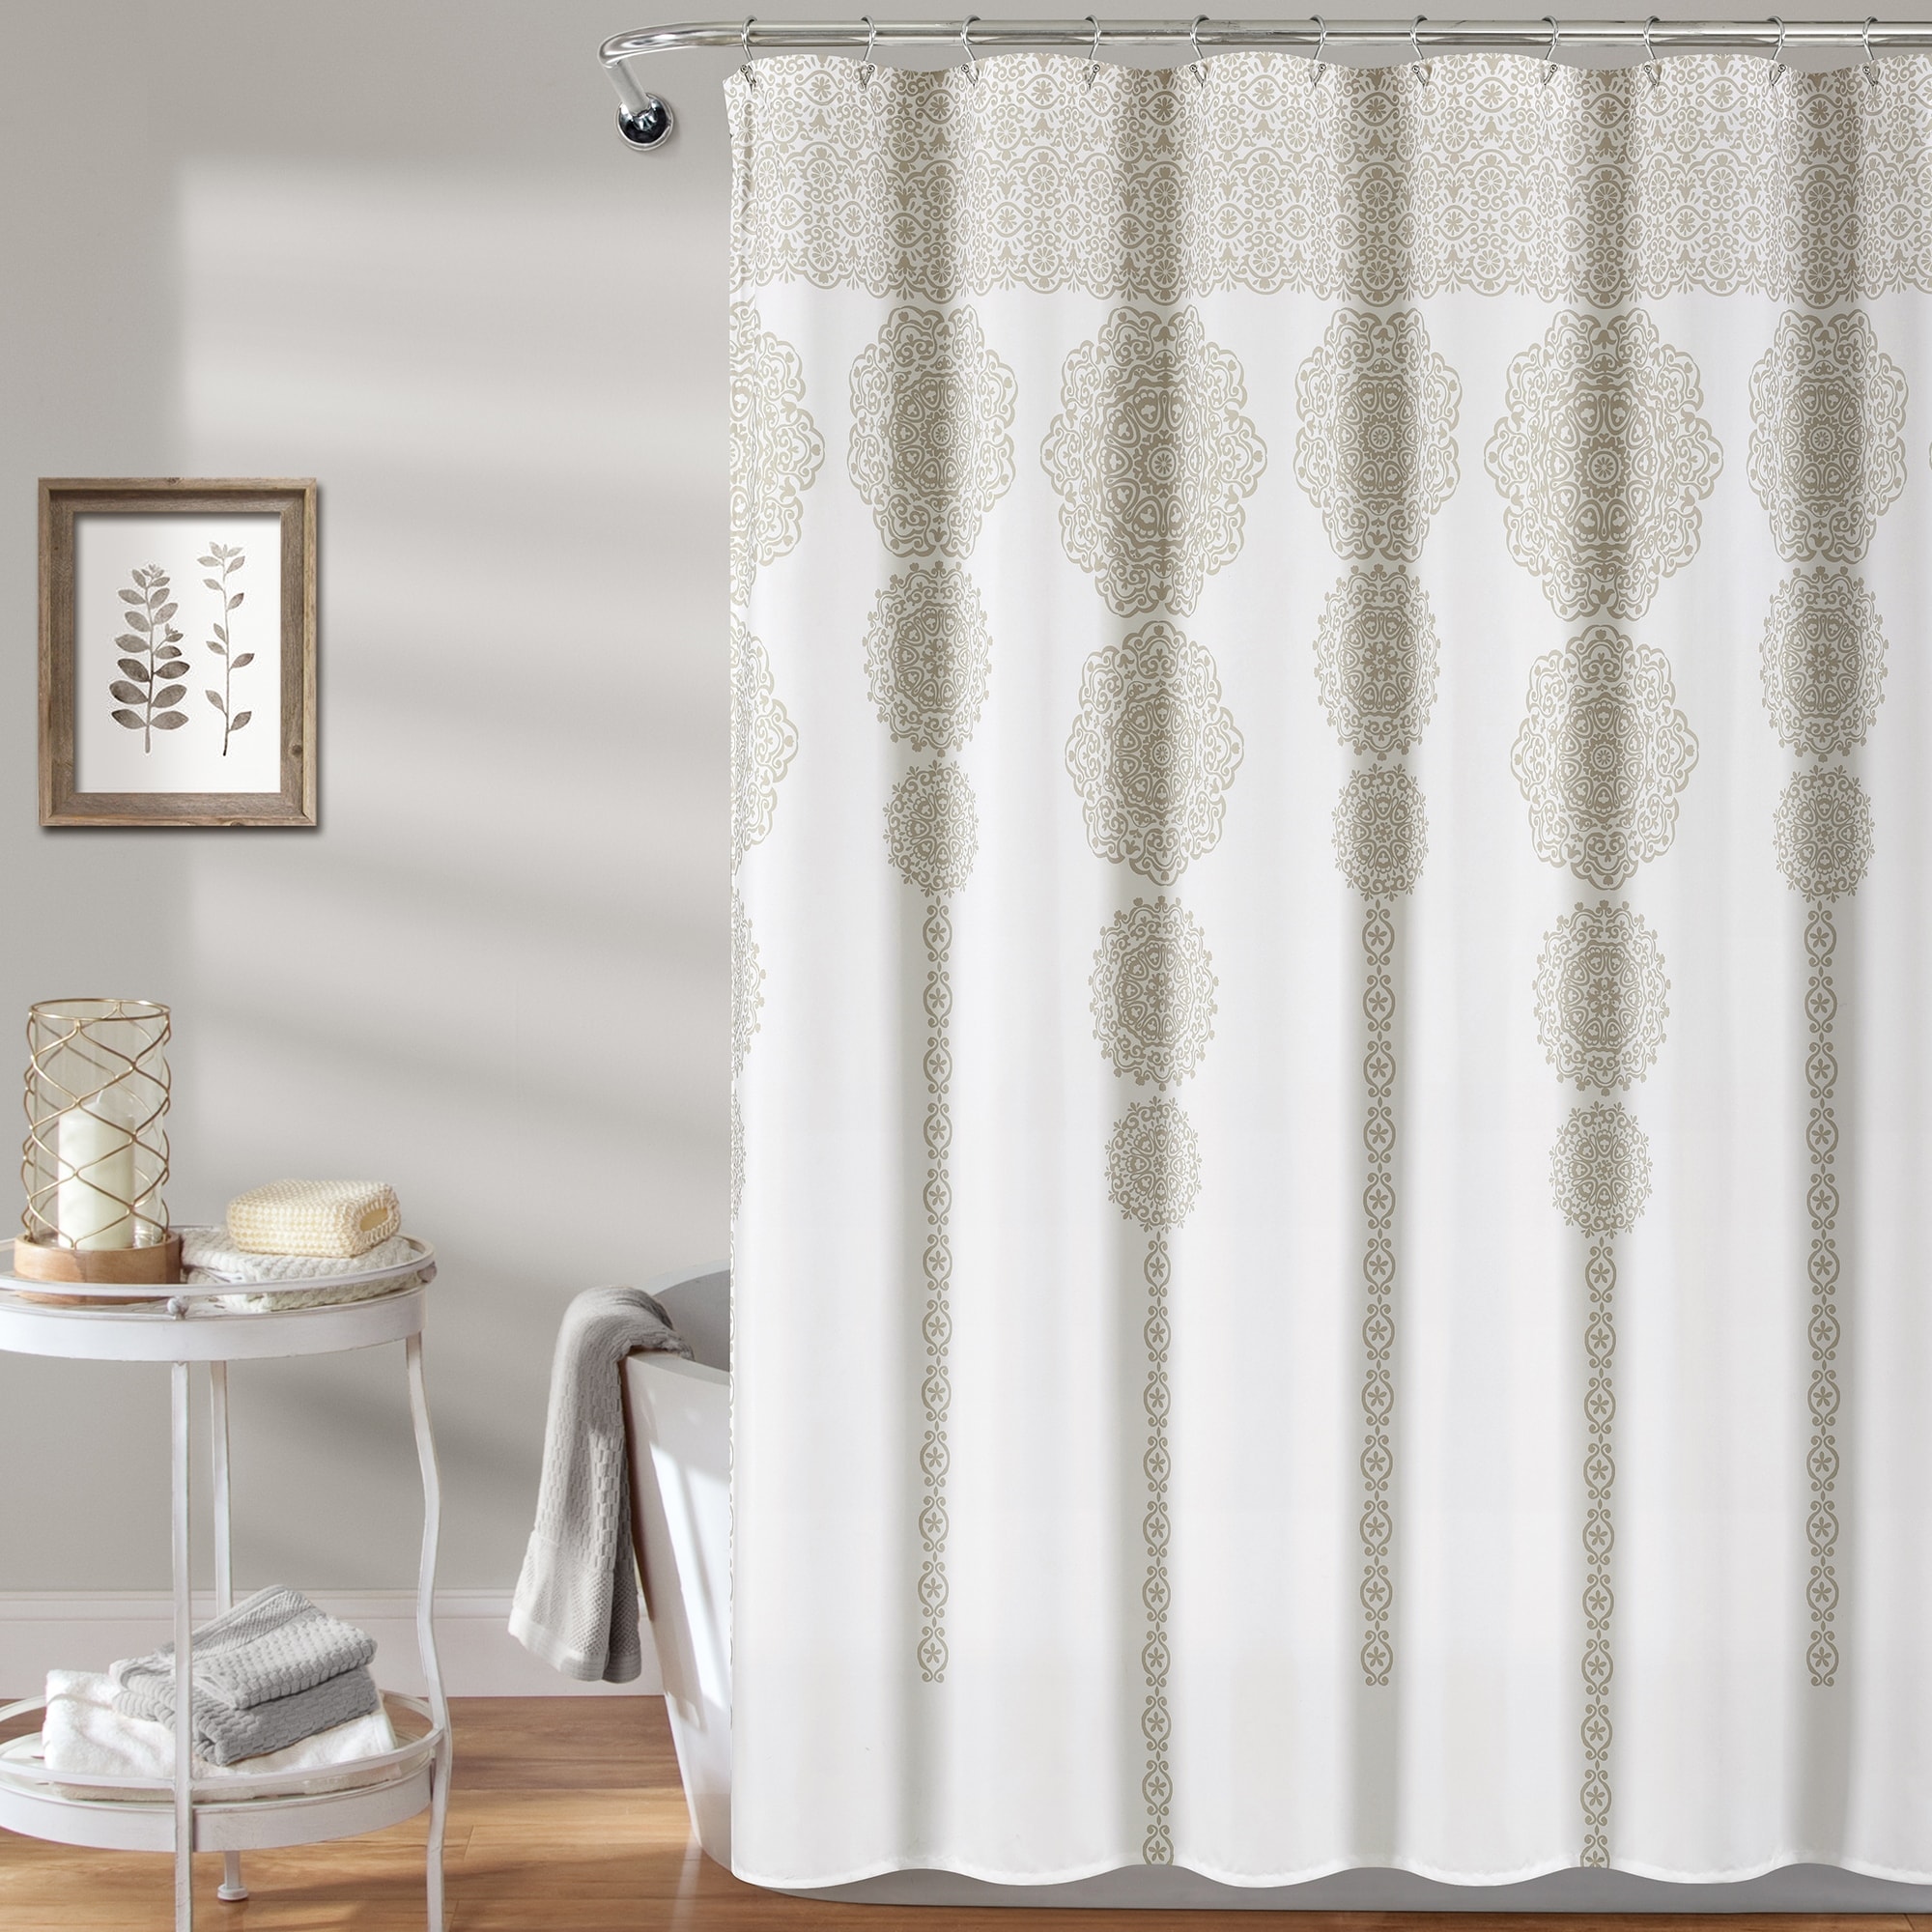 Gray Boho Medallion Shower Curtain-Fabric Bohemian Damask Print Design with Tassels Lush Decor 72 x 72 